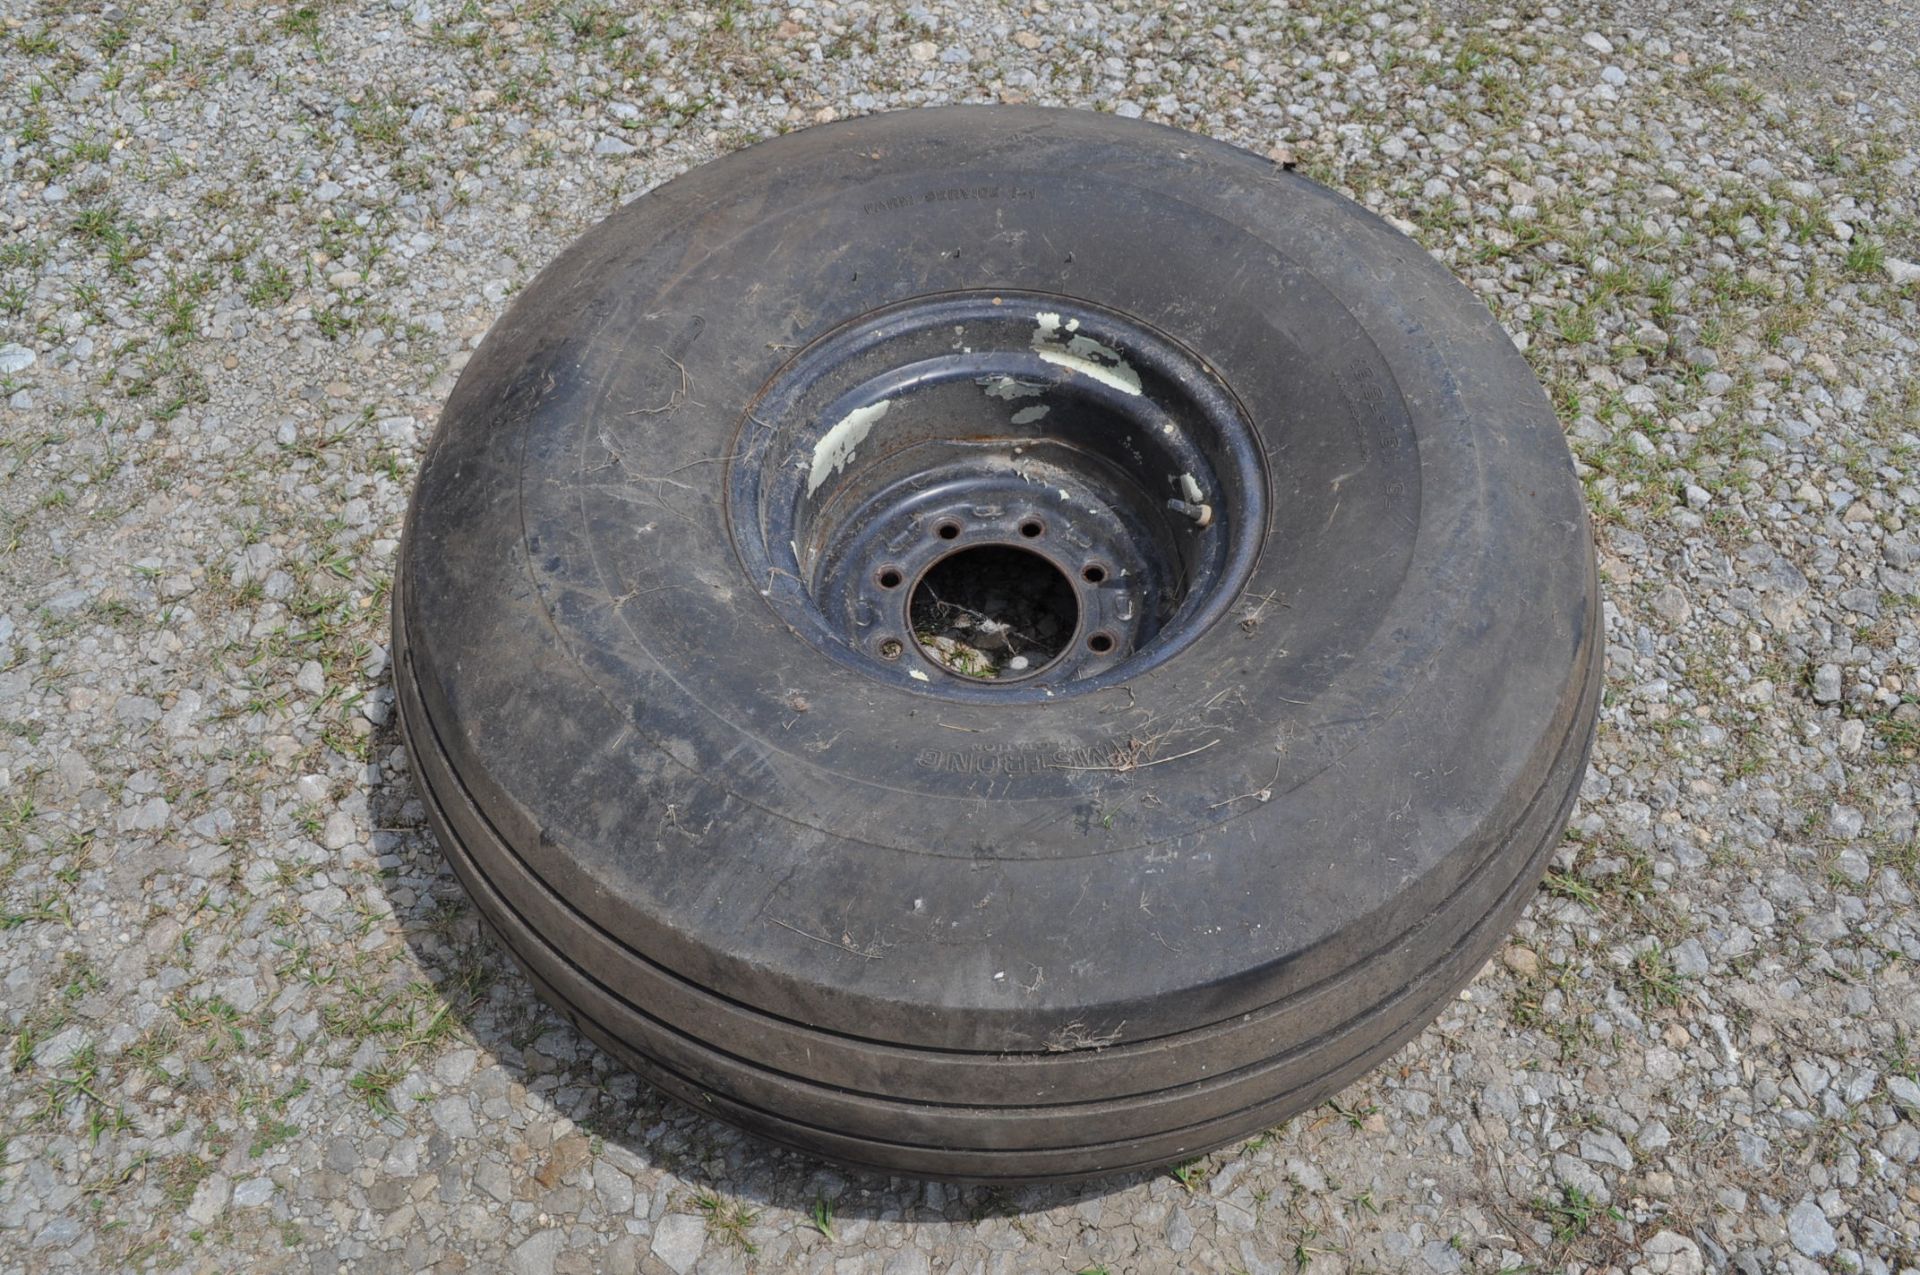 16.5L-16.1 SL tire and 8 bolt rim, Walters Farm Bob & Linda Wright - Jeffersonville, OH (740) 572- - Image 2 of 3